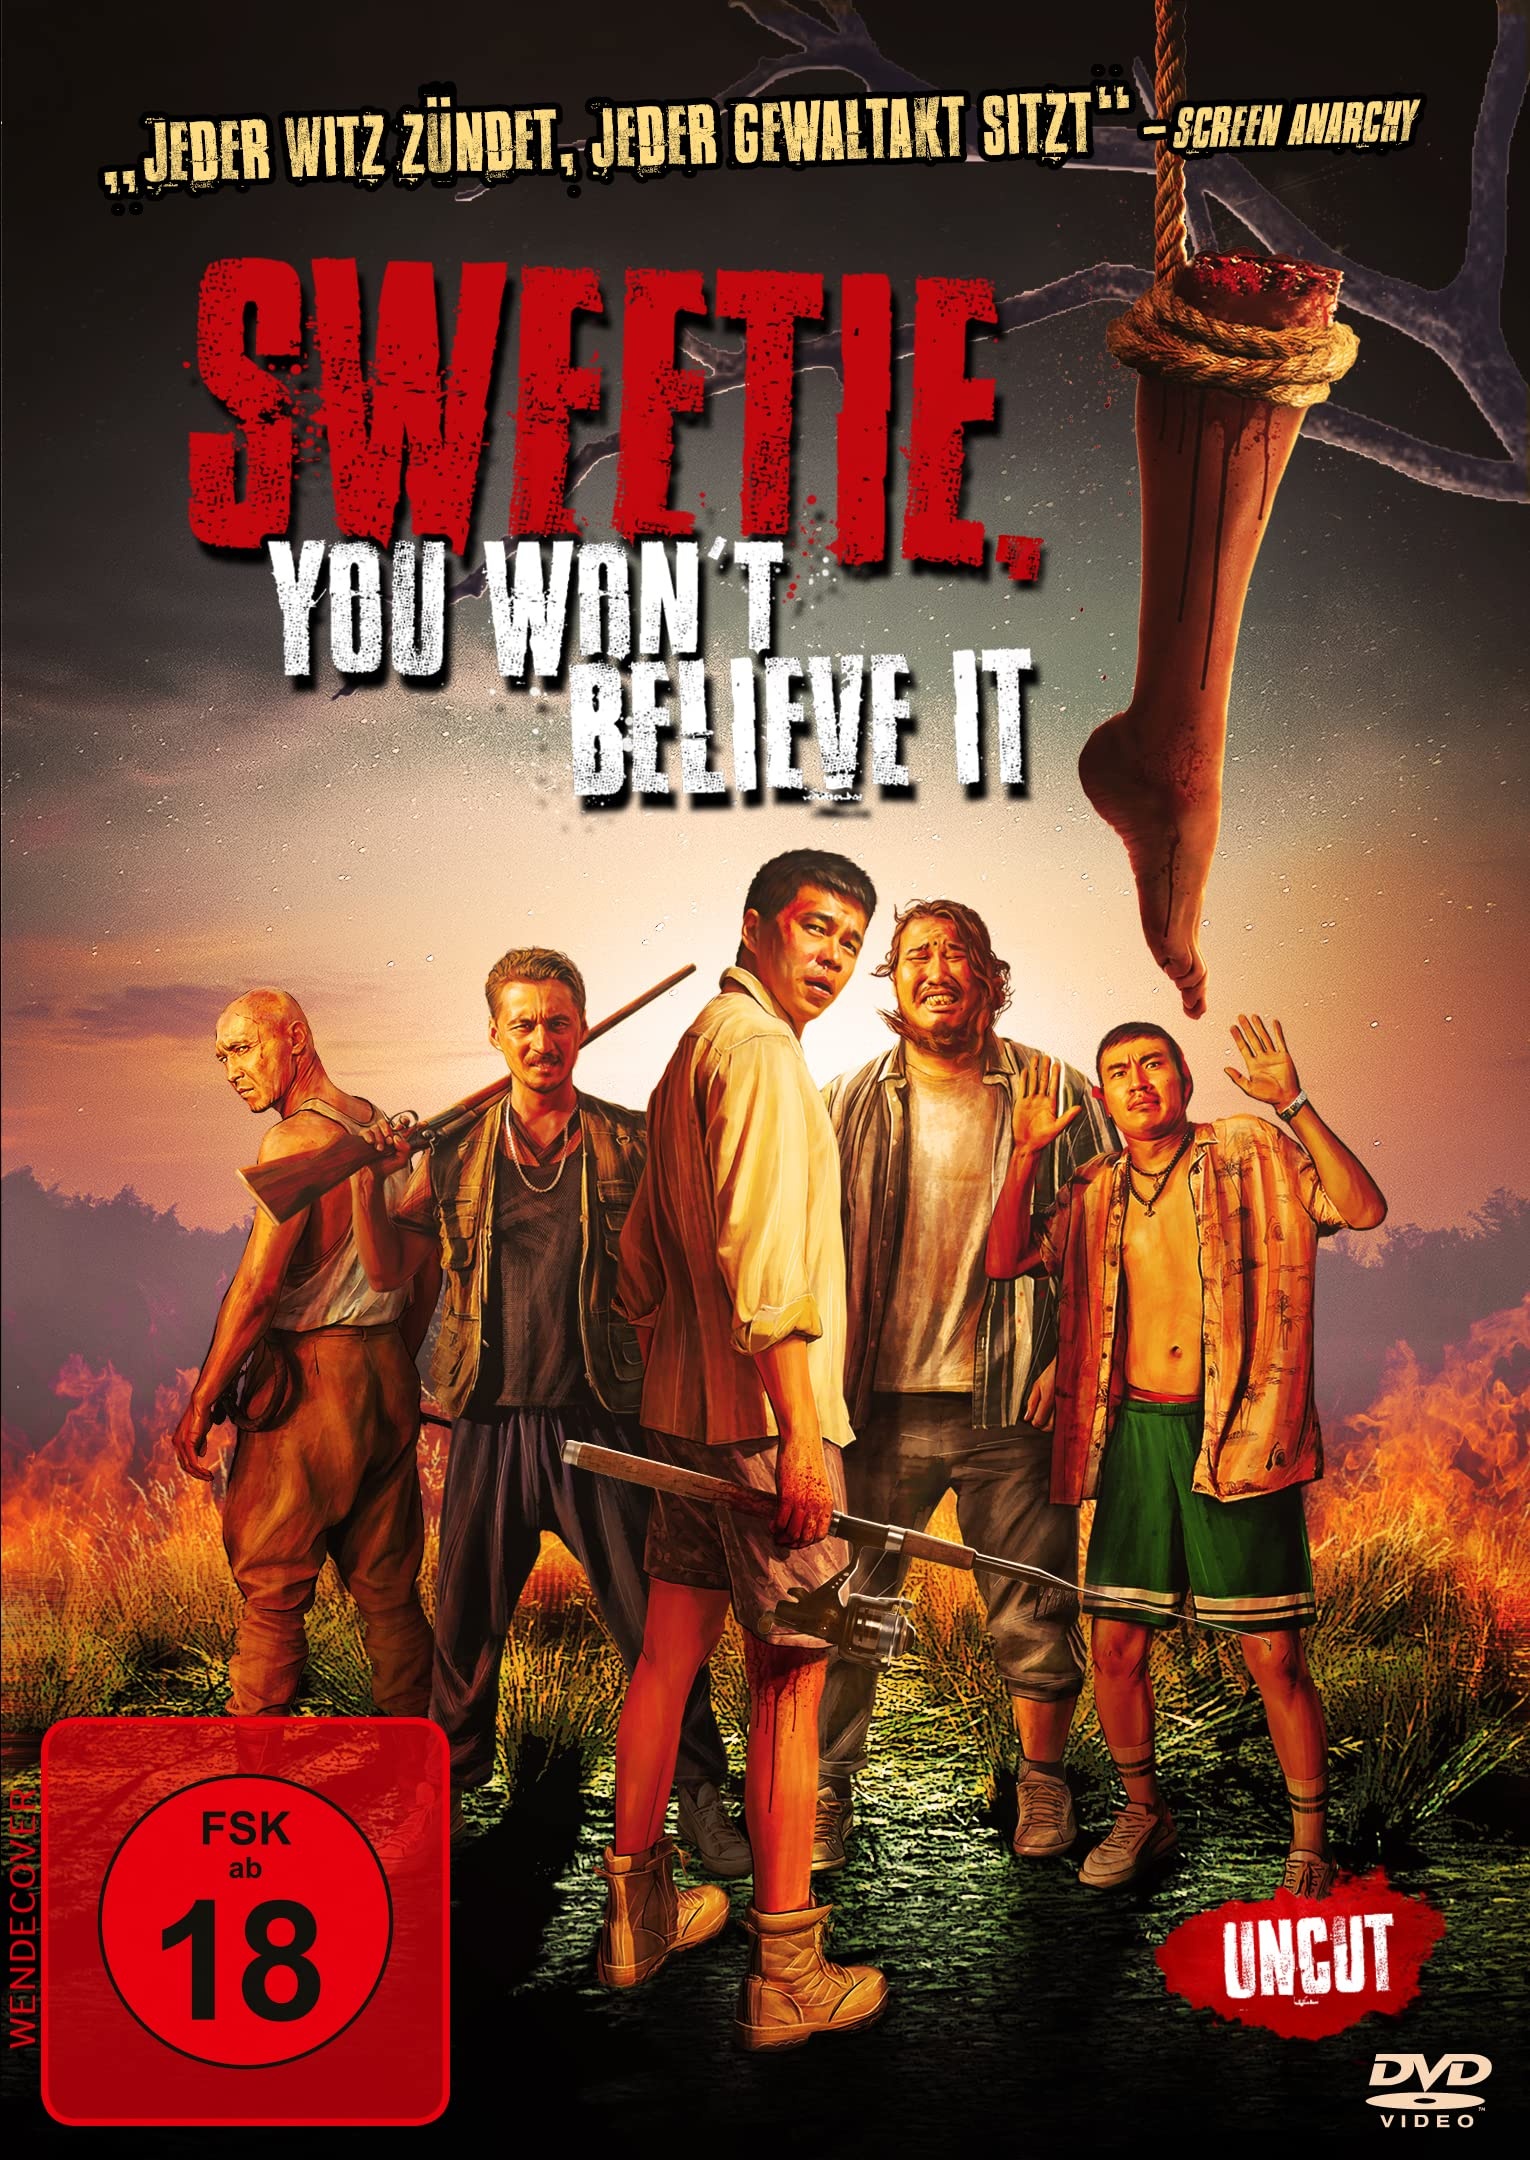 Sweetie, You Won't Believe It [DVD] (Neu differenzbesteuert)